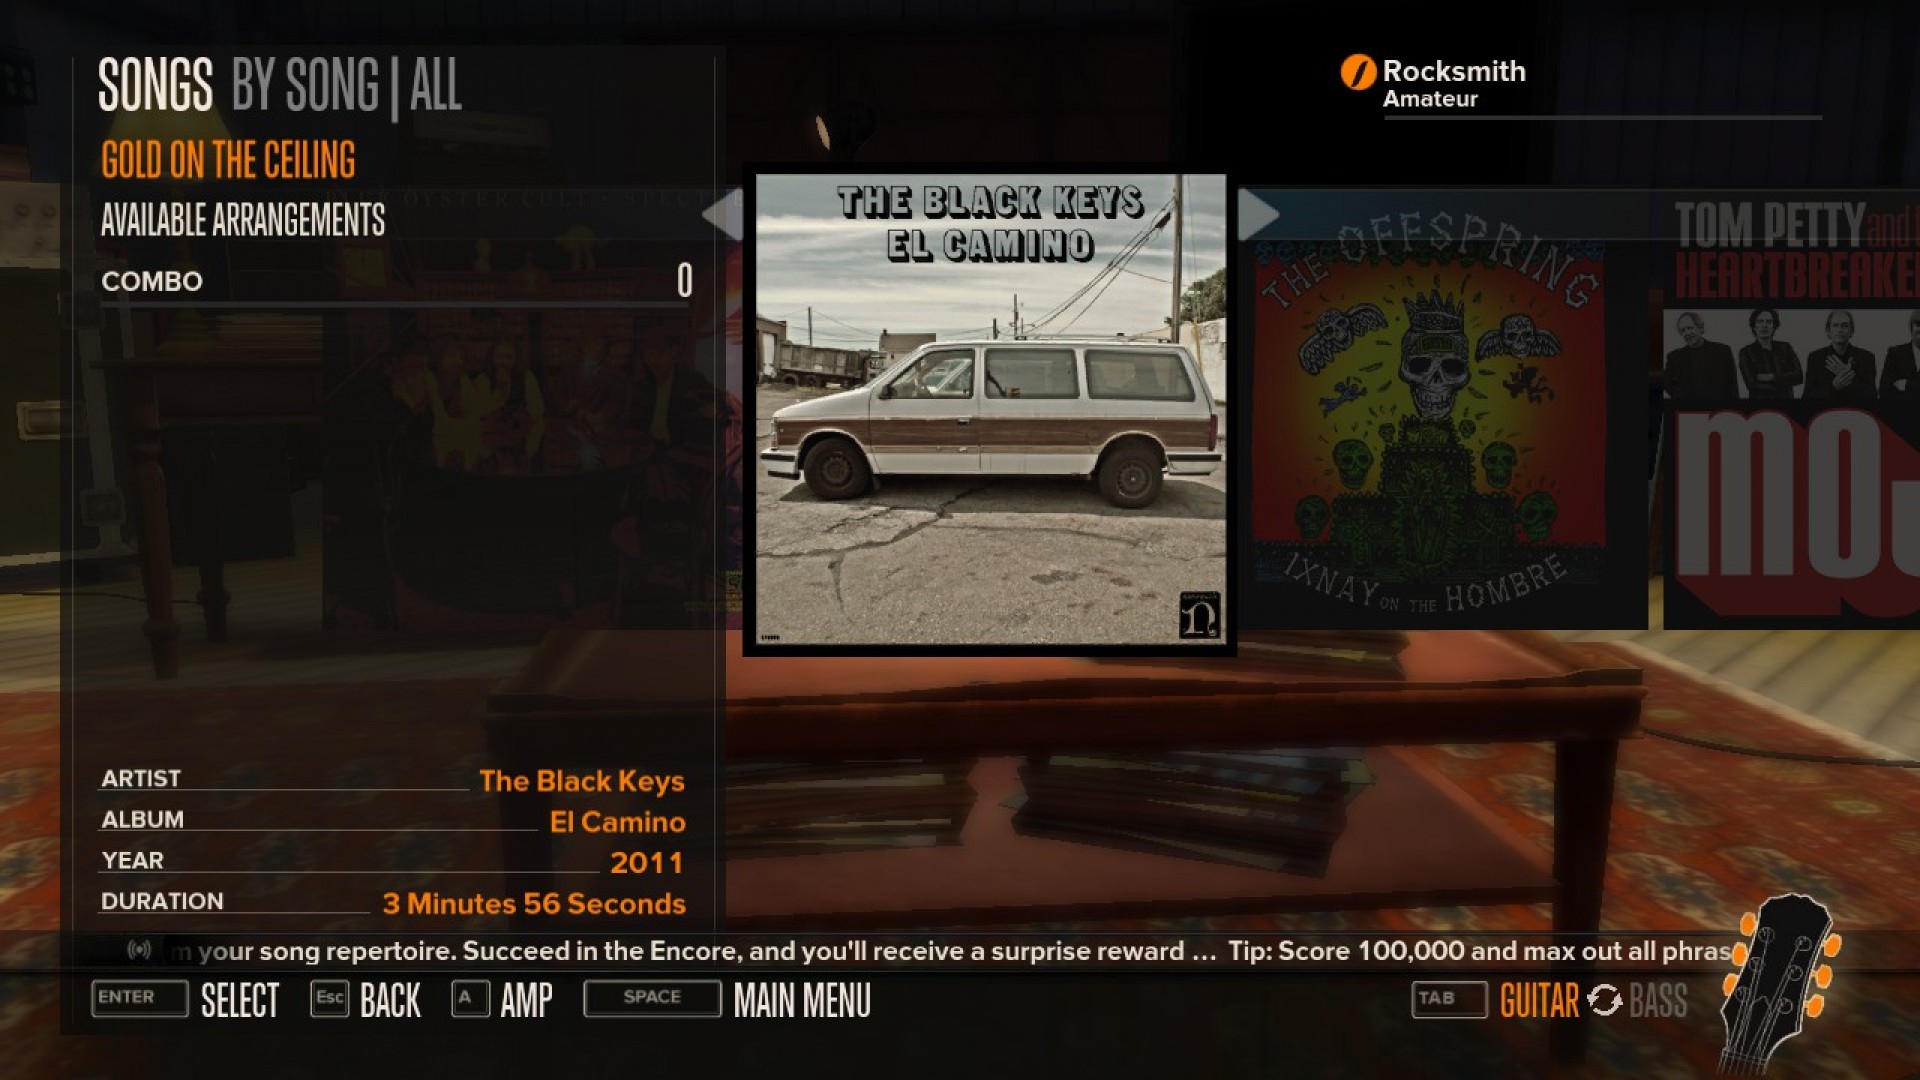 Rocksmith - The Black Keys - Gold on the Ceiling screenshot